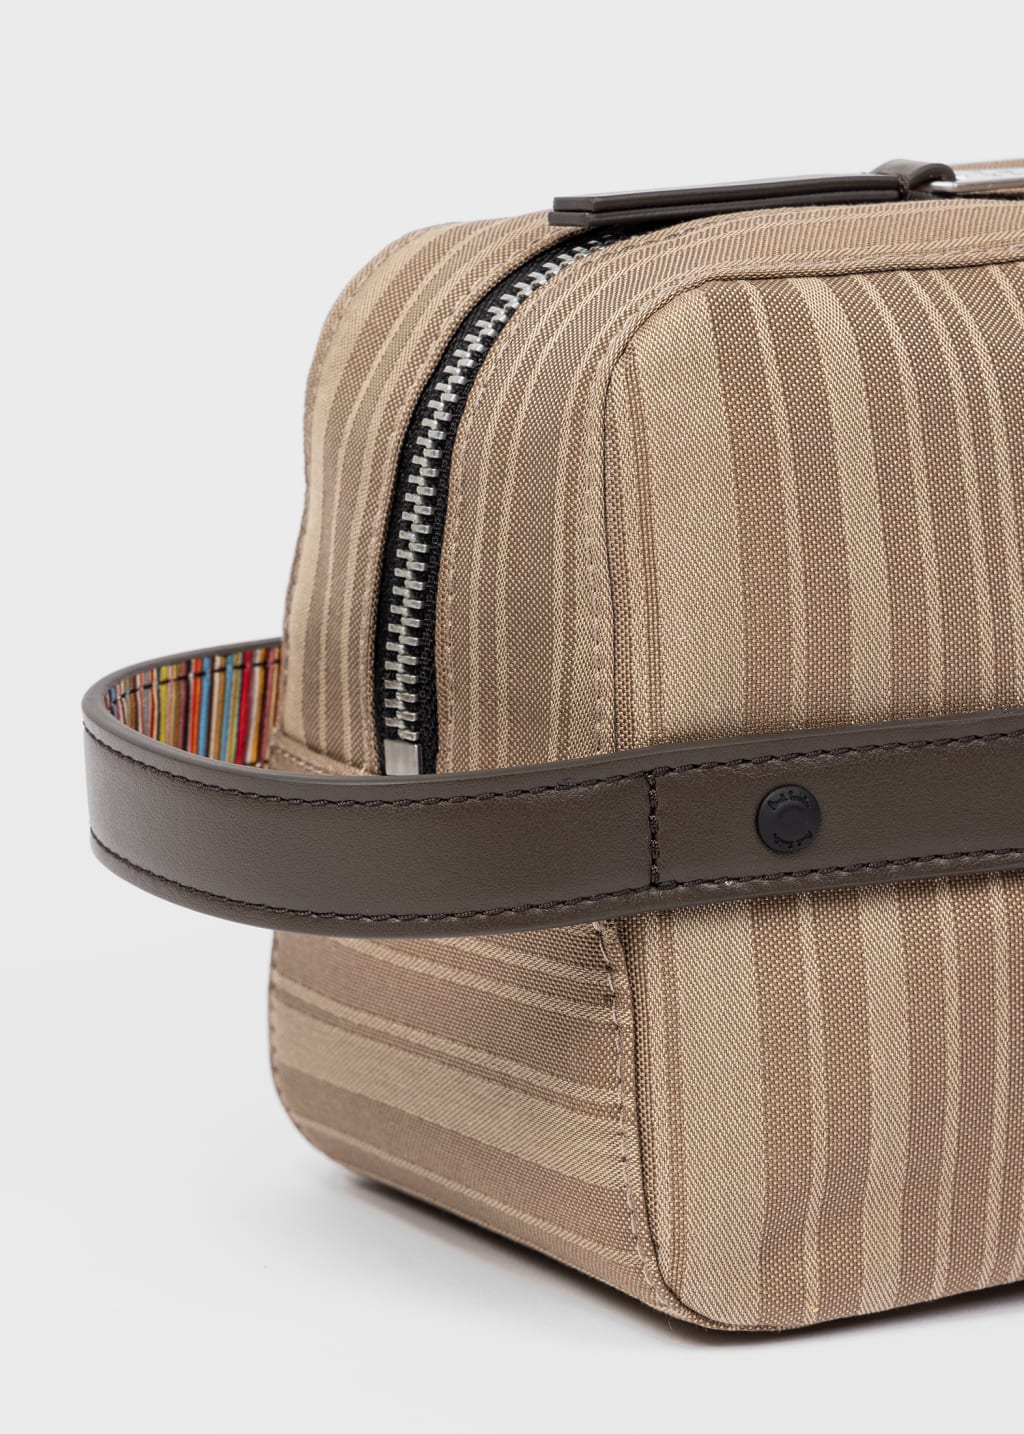 Detail View - Sand 'Shadow Stripe' Wash Bag Paul Smith